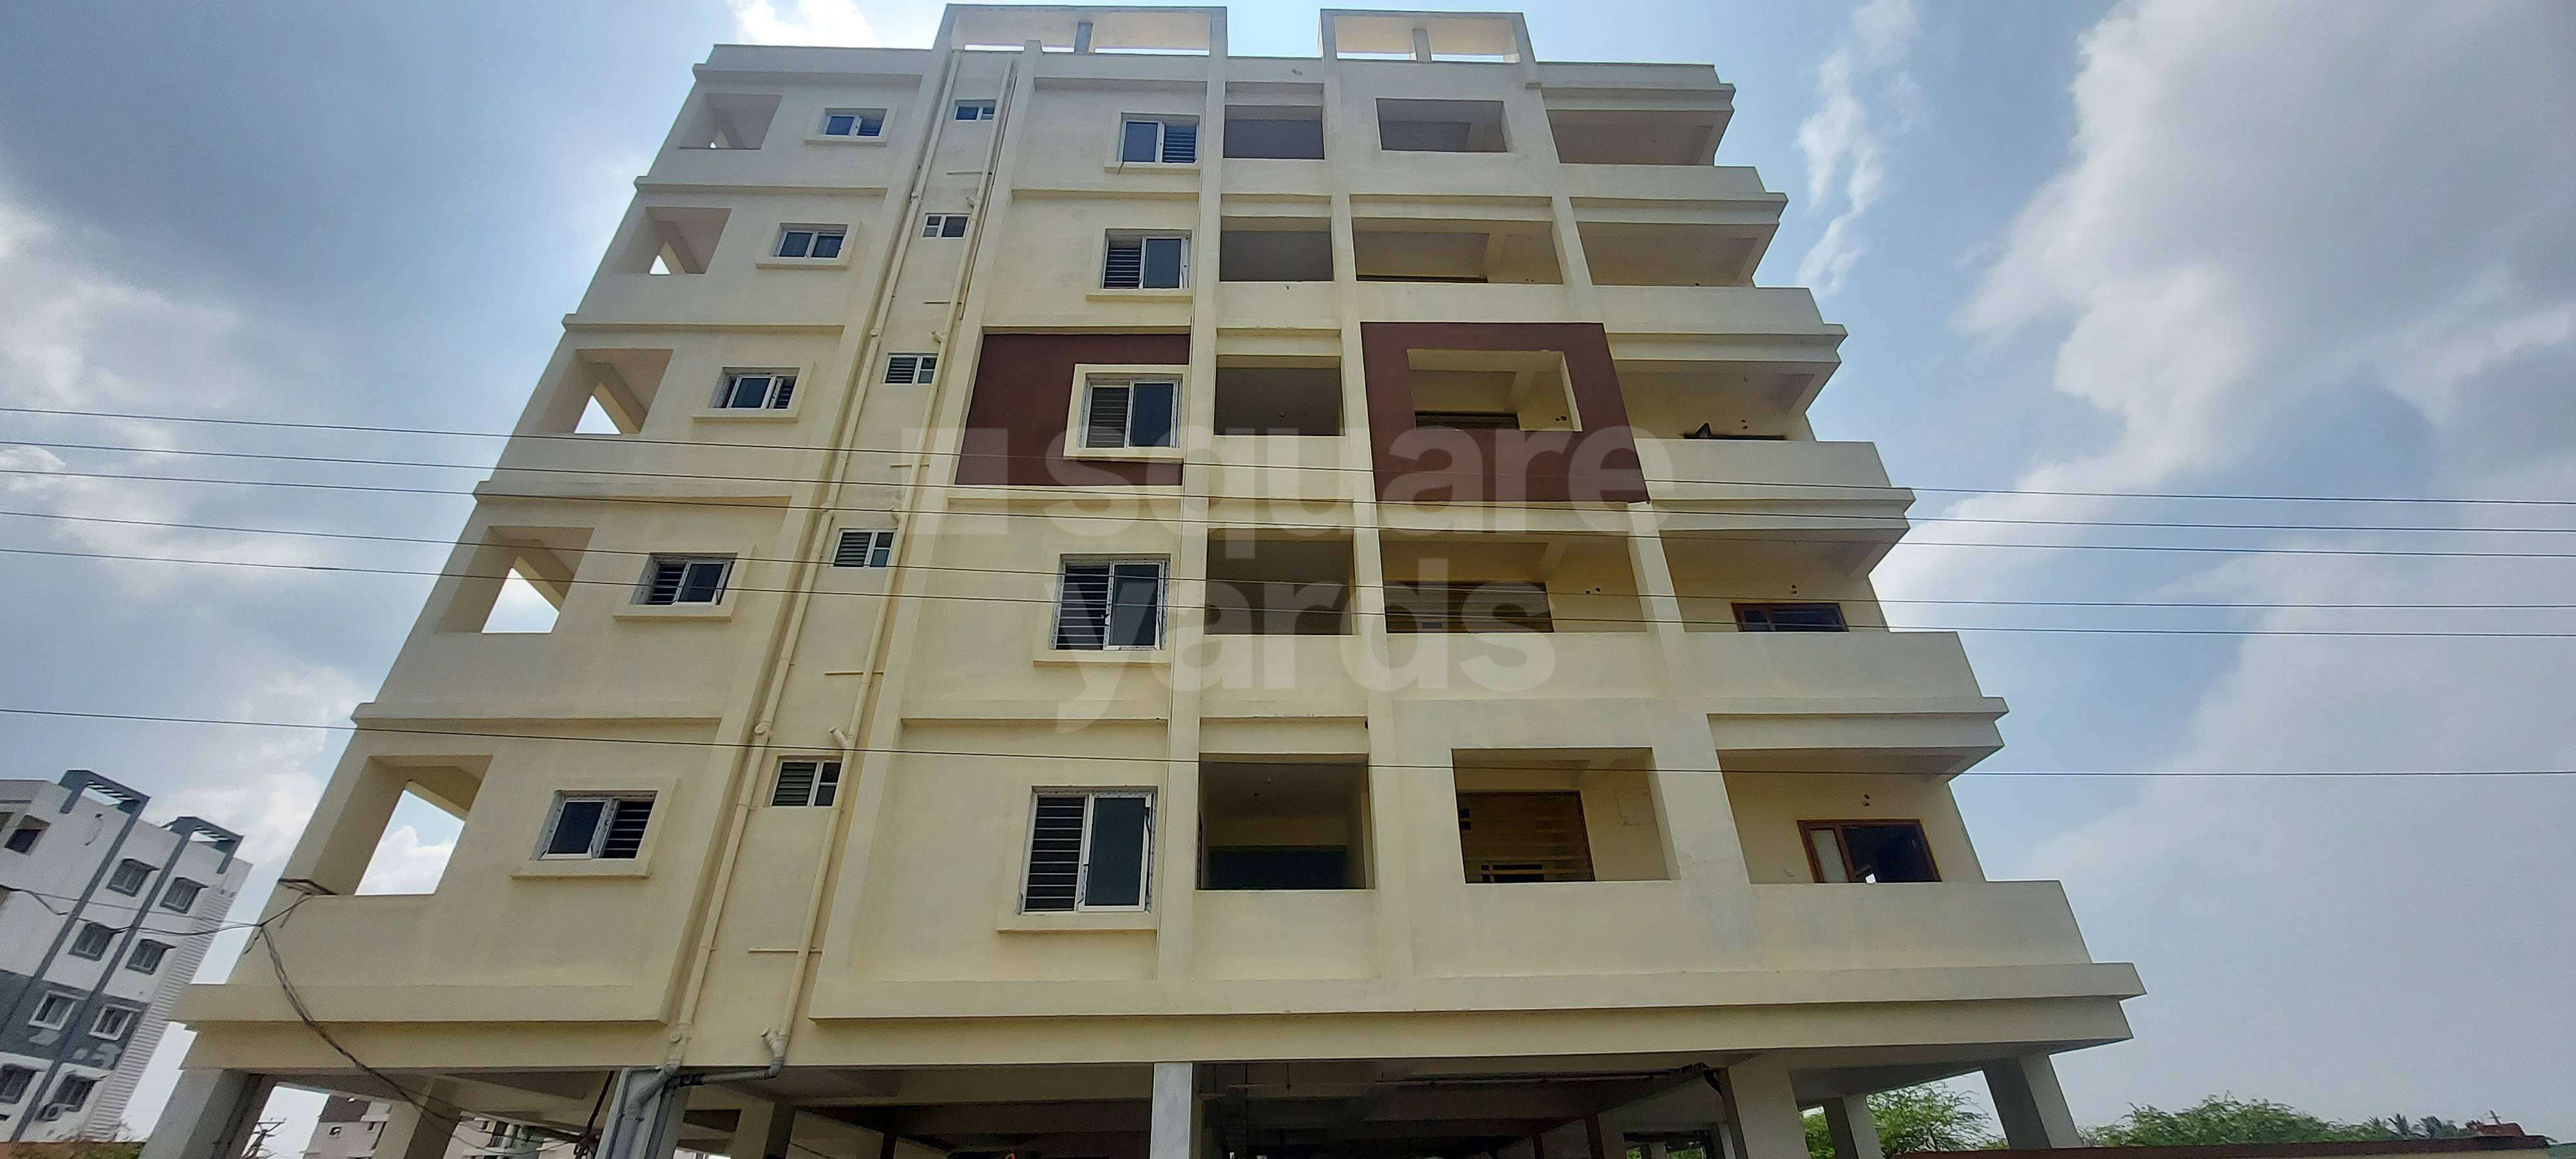 4 BHK Flats/Apartments in Guntur | Homes247.in